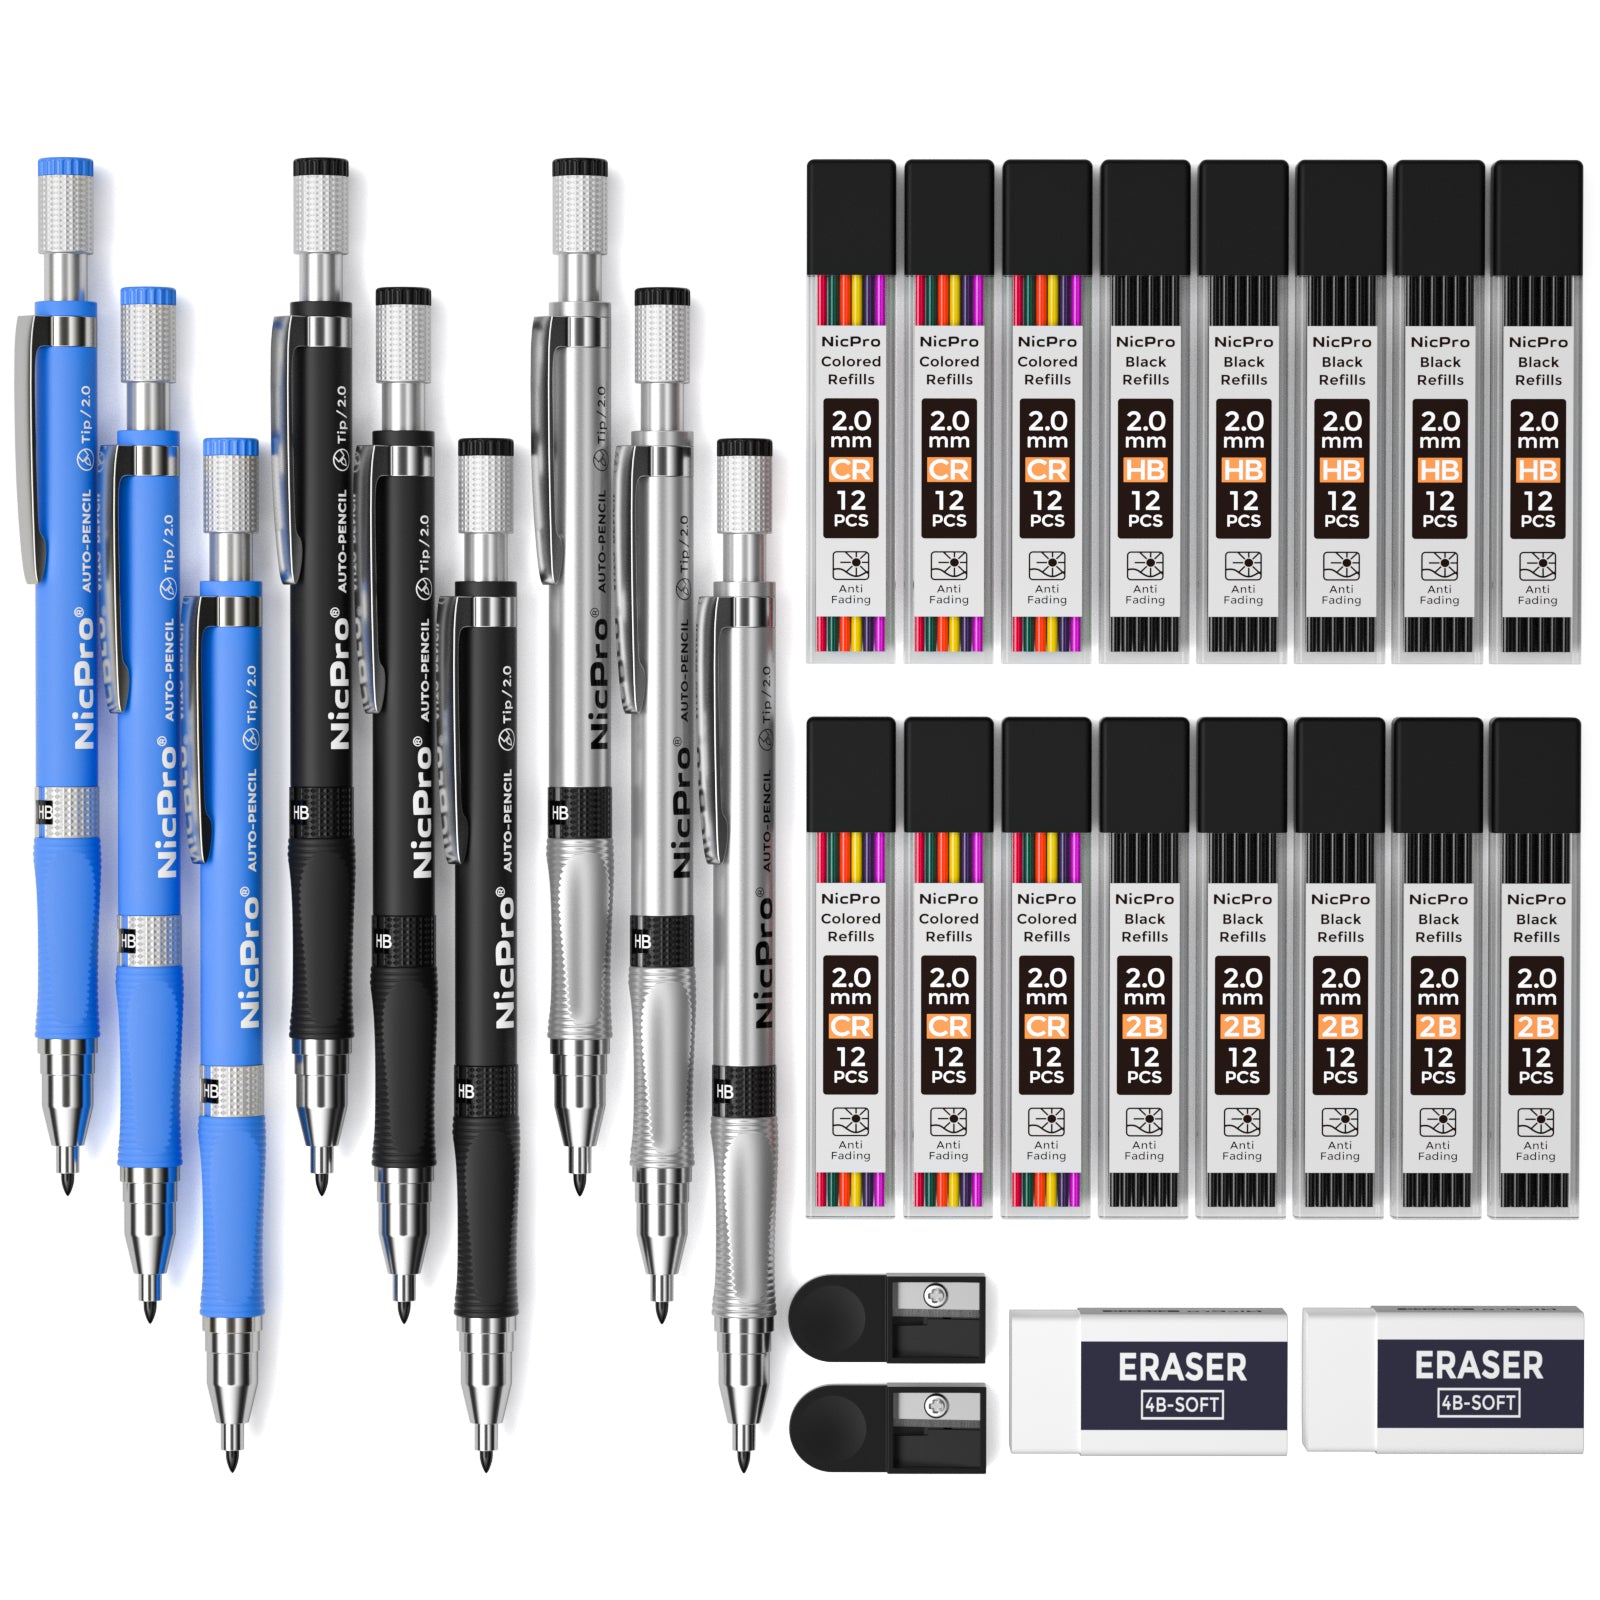 Nicpro 2.0 mm Mechanical Pencil Set, 9 Artist Carpenters Drafting Clut